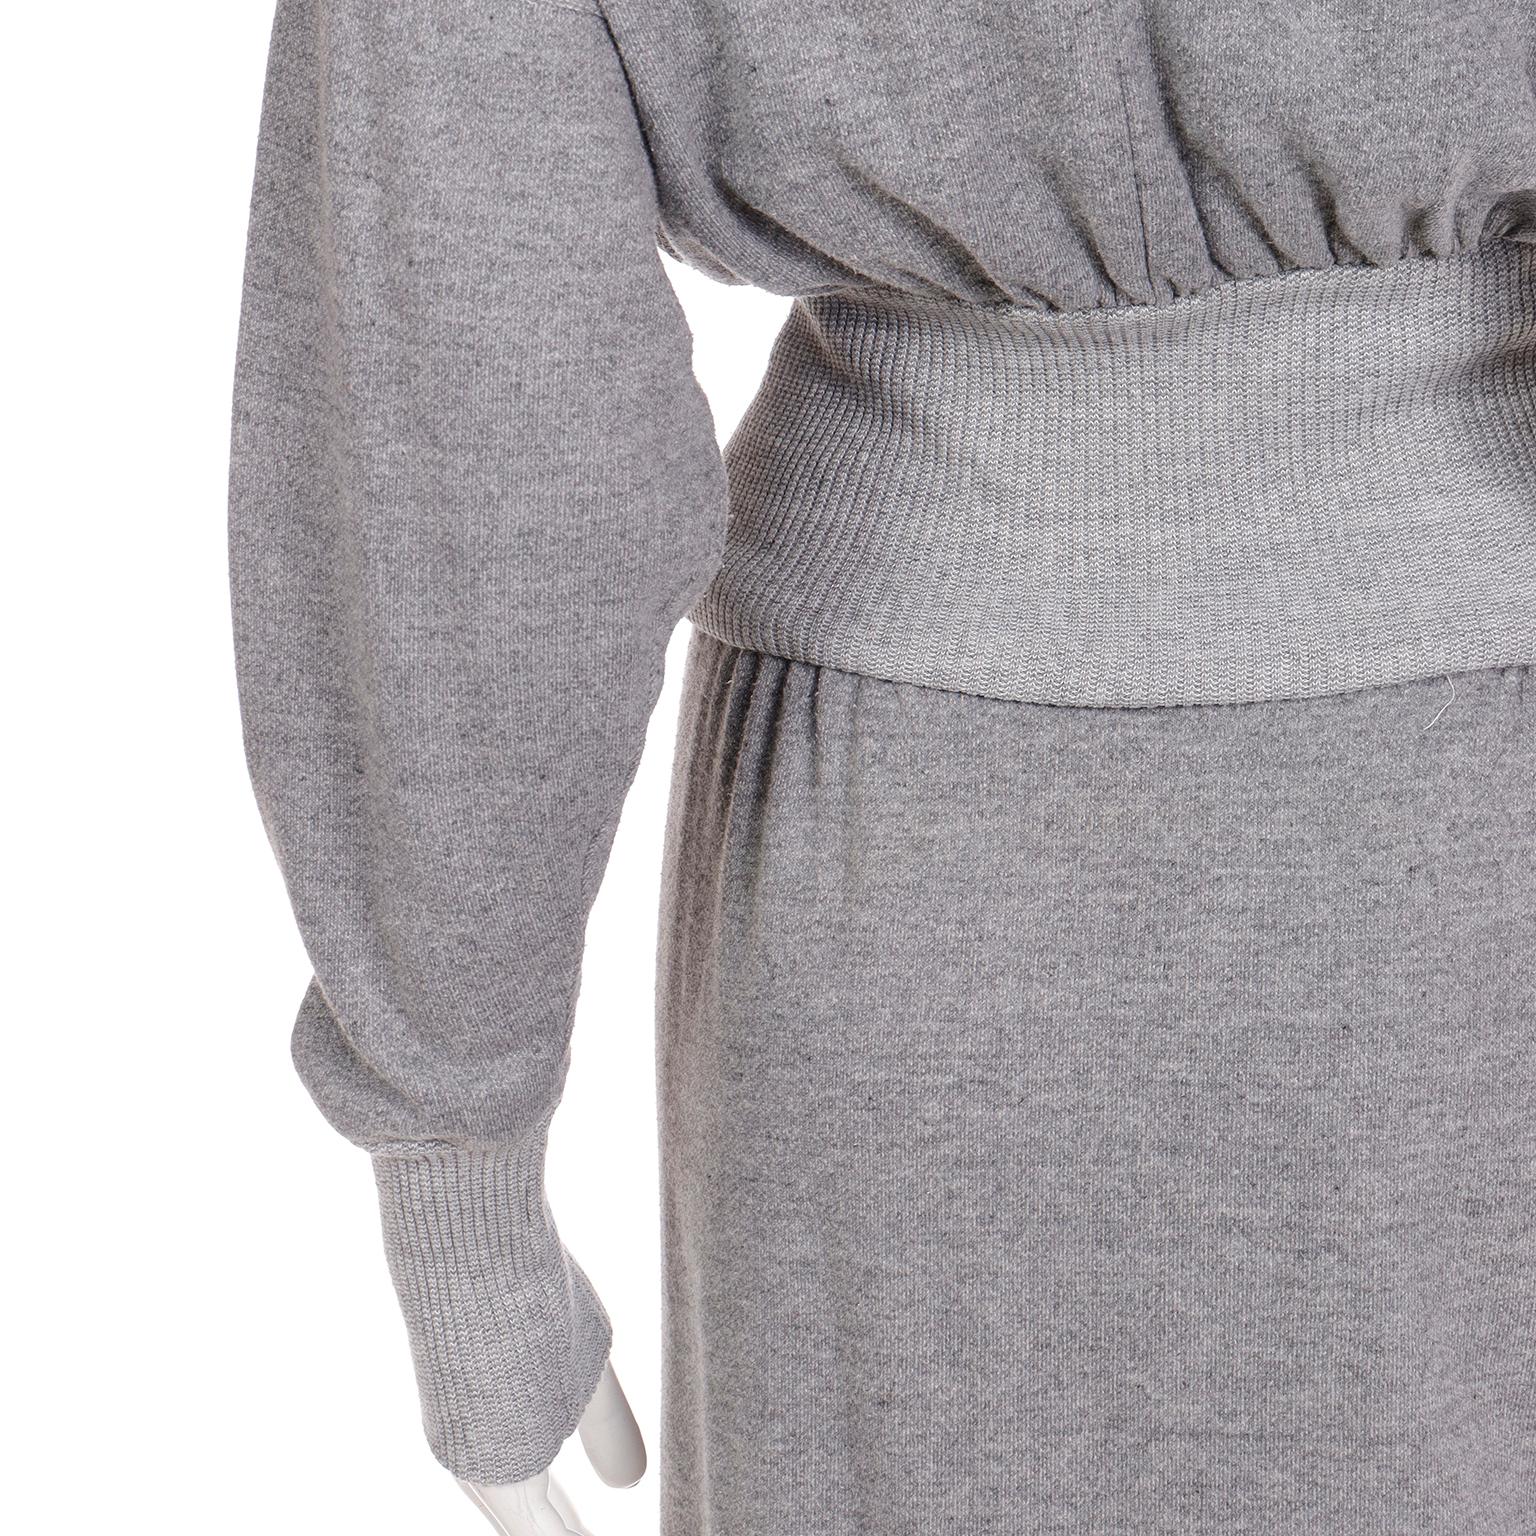 Norma Kamali 1980 Sweats Grey Sweatshirt 2 pc Dress w Snap Front Top & Skirt For Sale 5